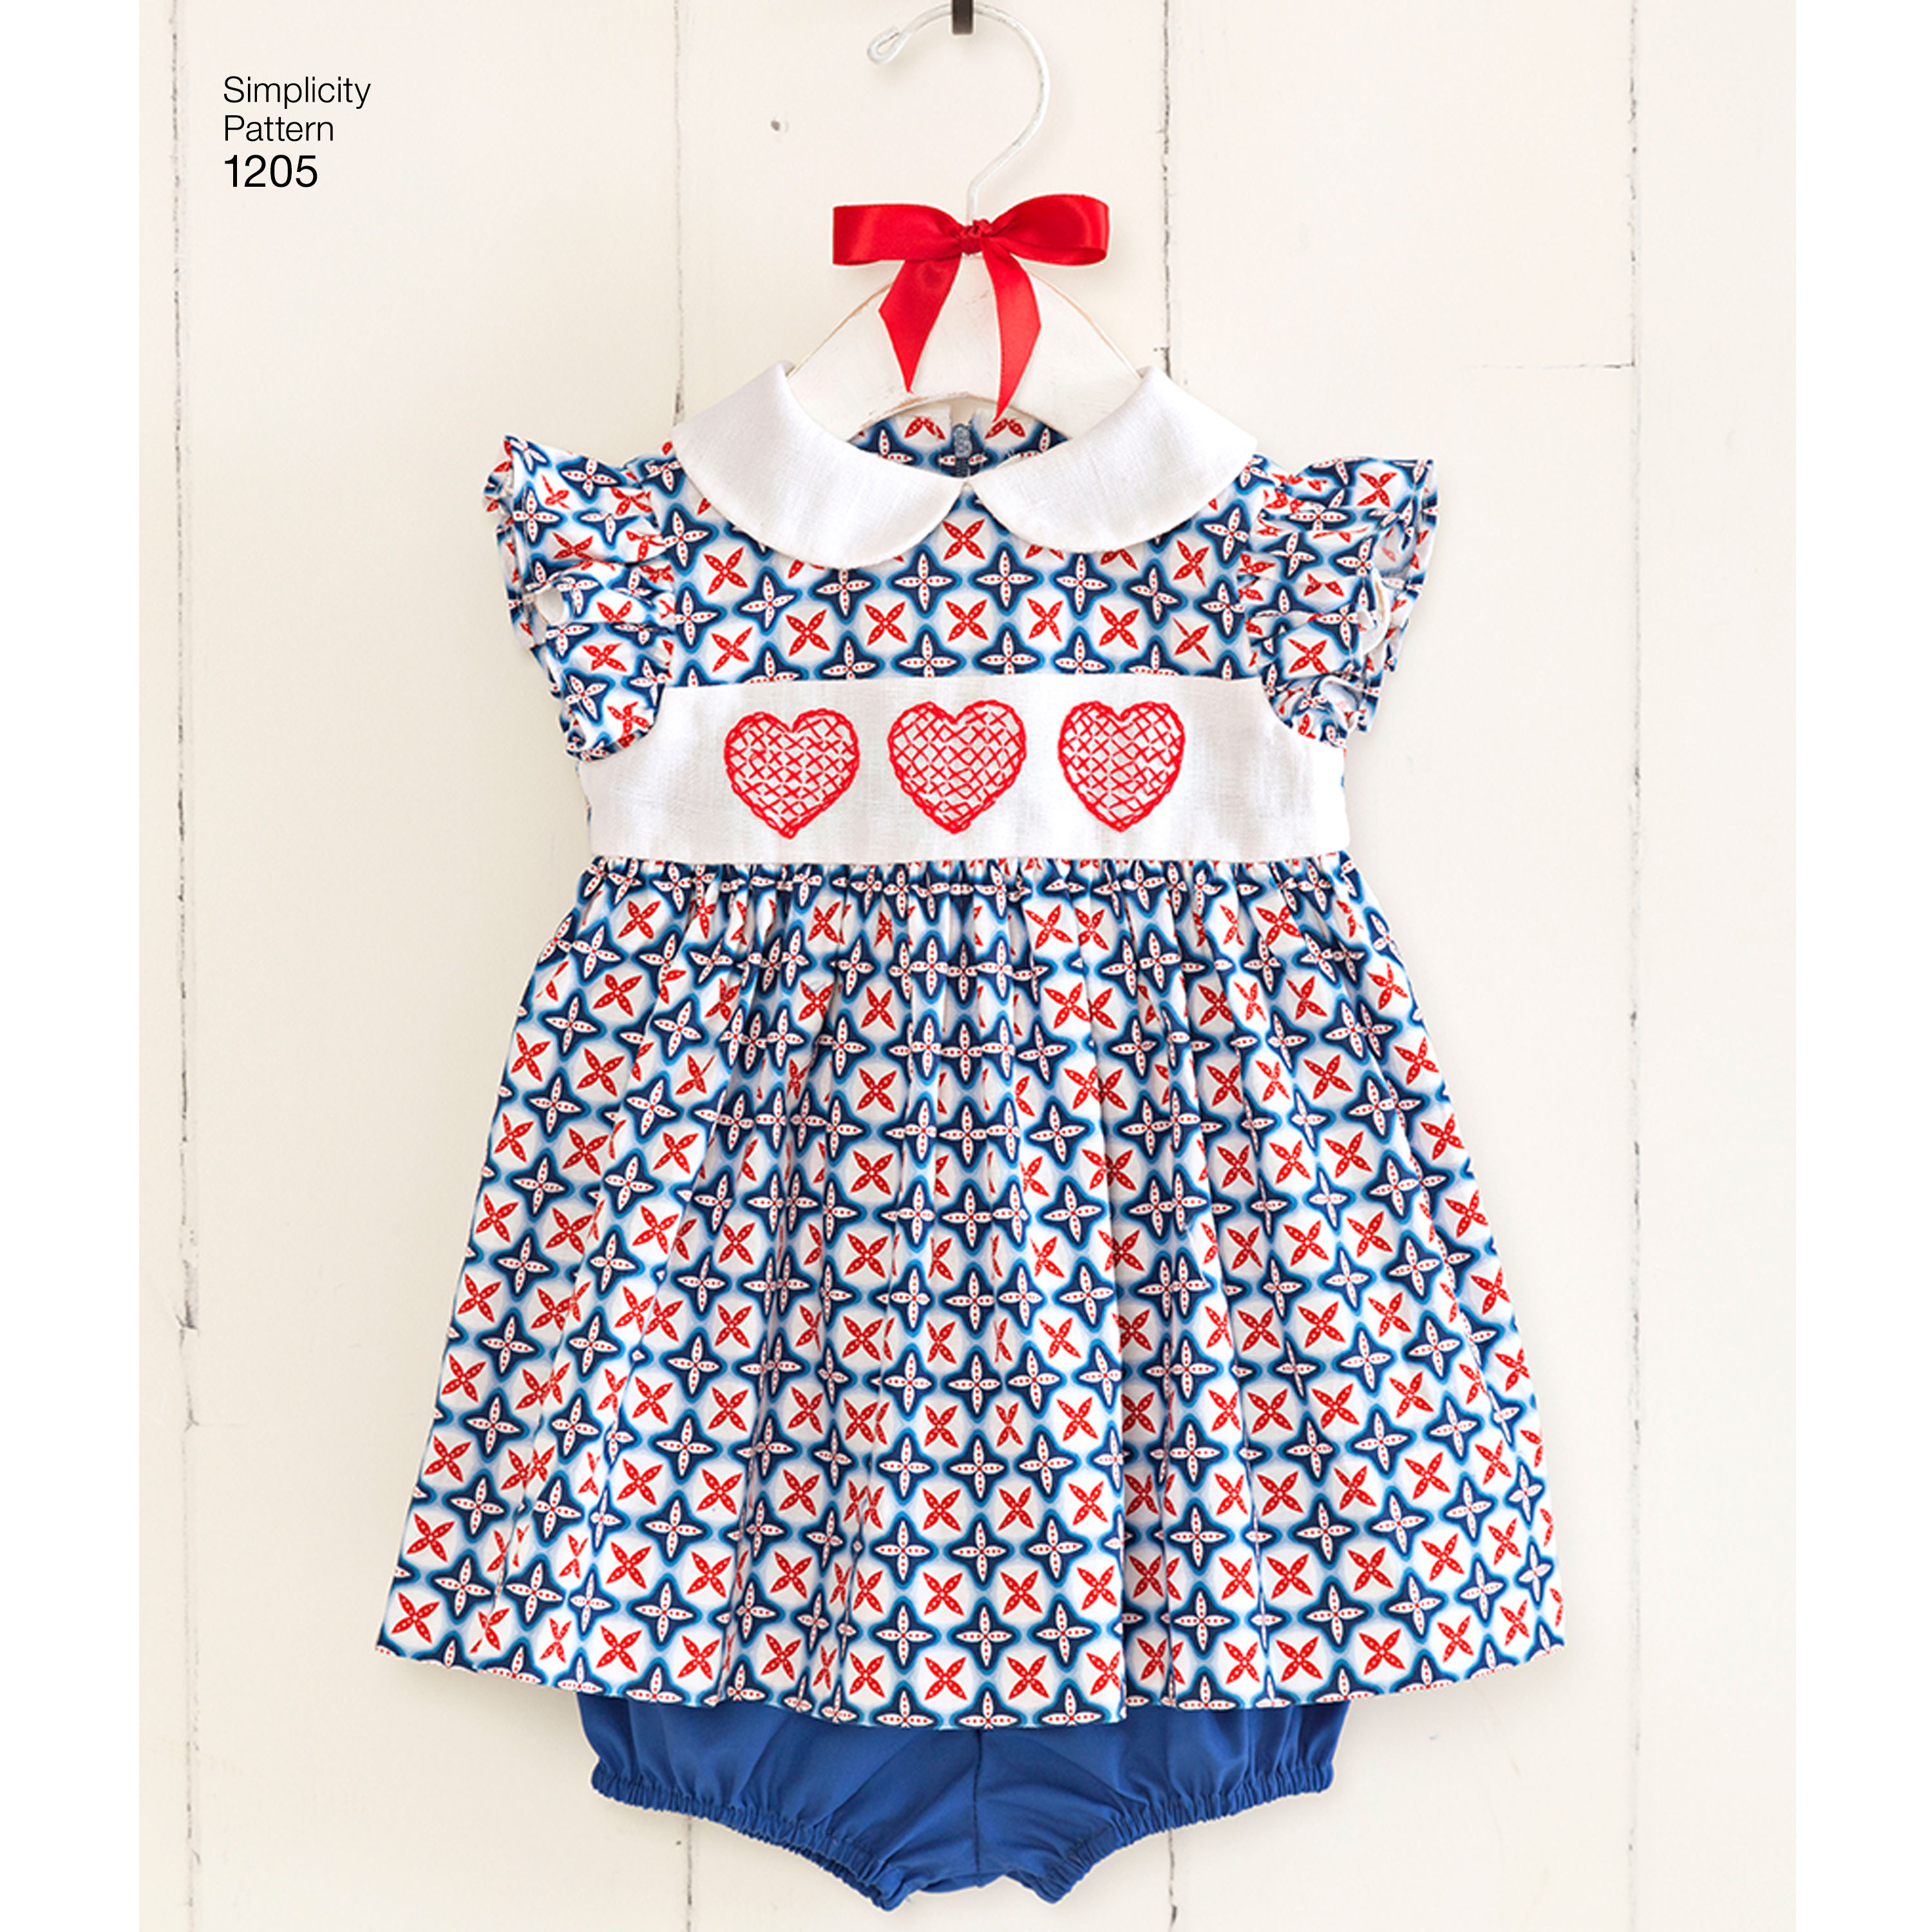 Simplicity 1205 sewing pattern babies baby dress panties